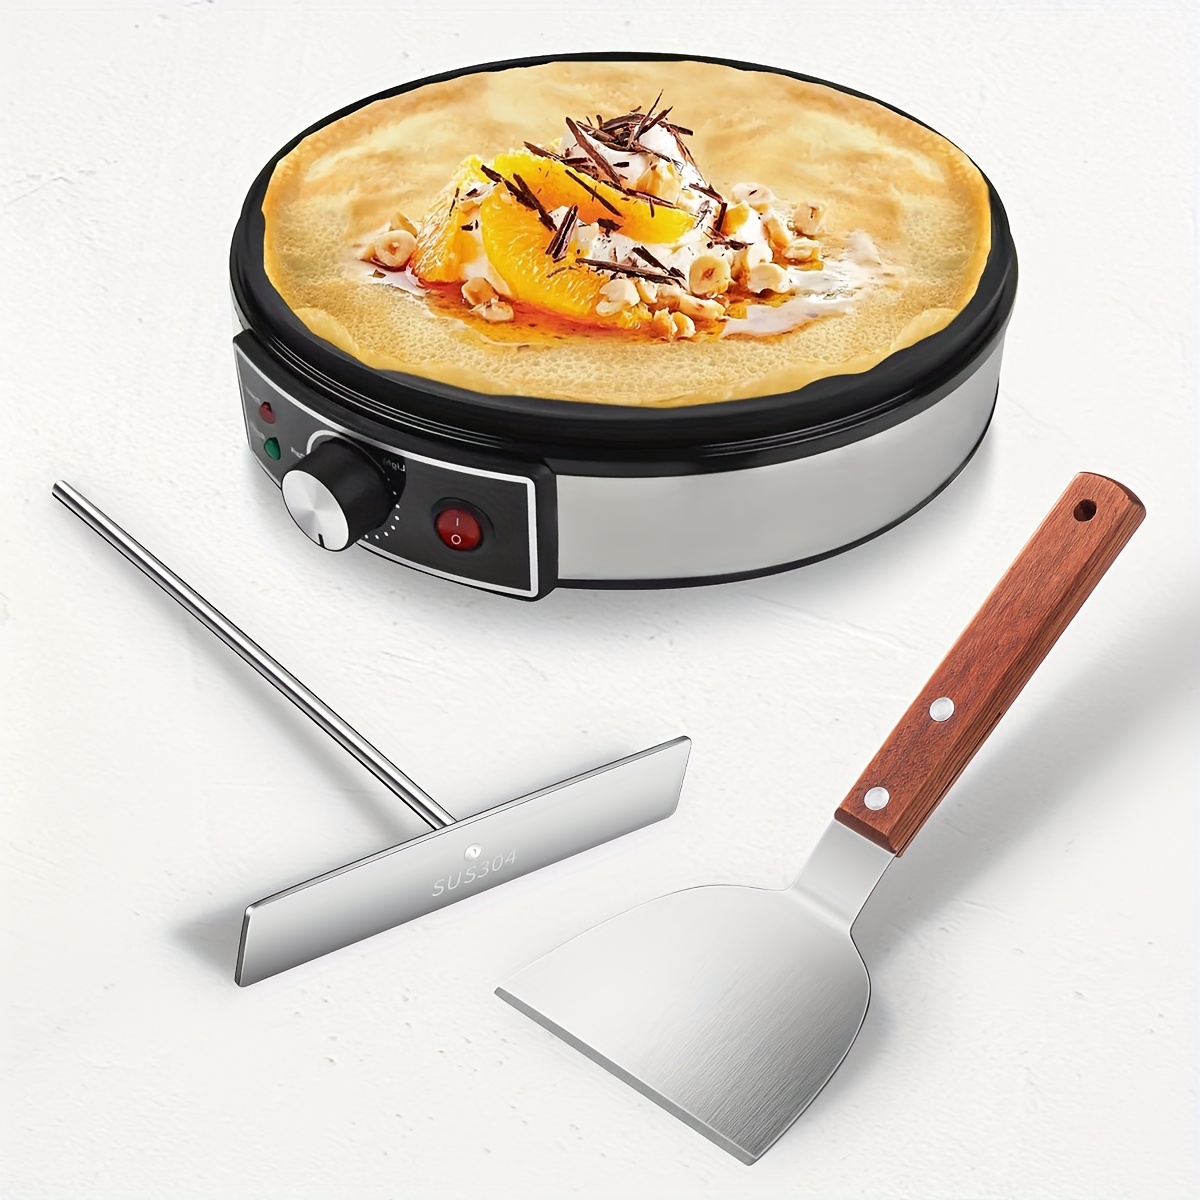  Instant Crepe Maker, Electric Crepe Maker, Portable Mini  Household Non-stick Pancake Machine, Pancake Maker, Batter Spreader,  Kitchen Cooking Tools: Home & Kitchen